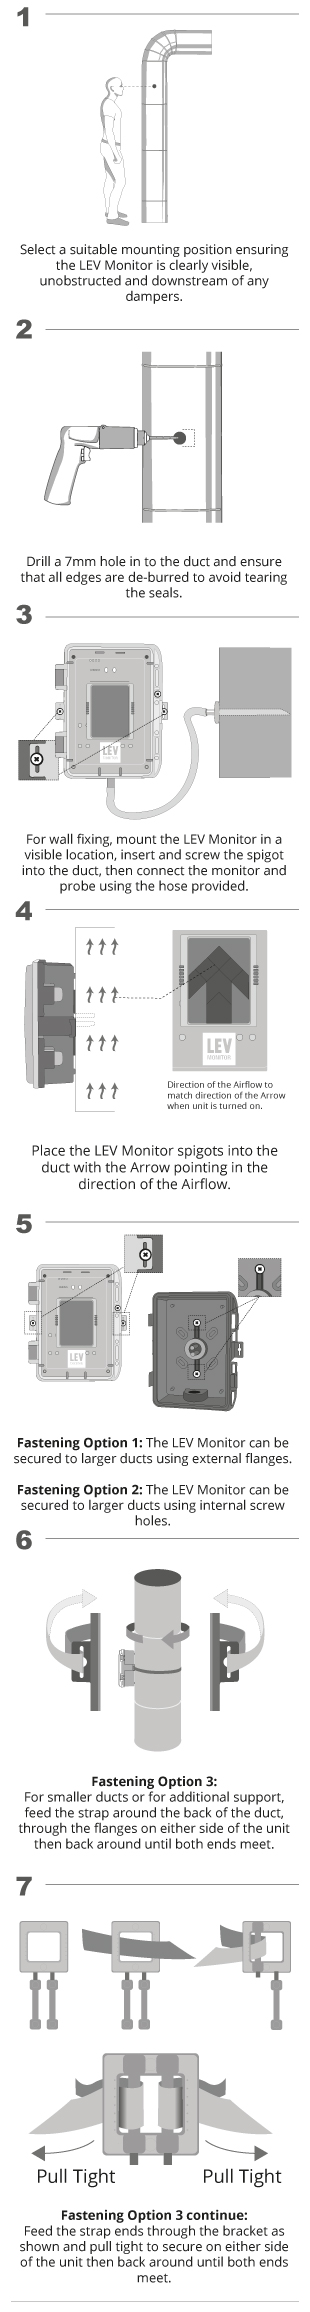 LEV Monitor Installation Instructions